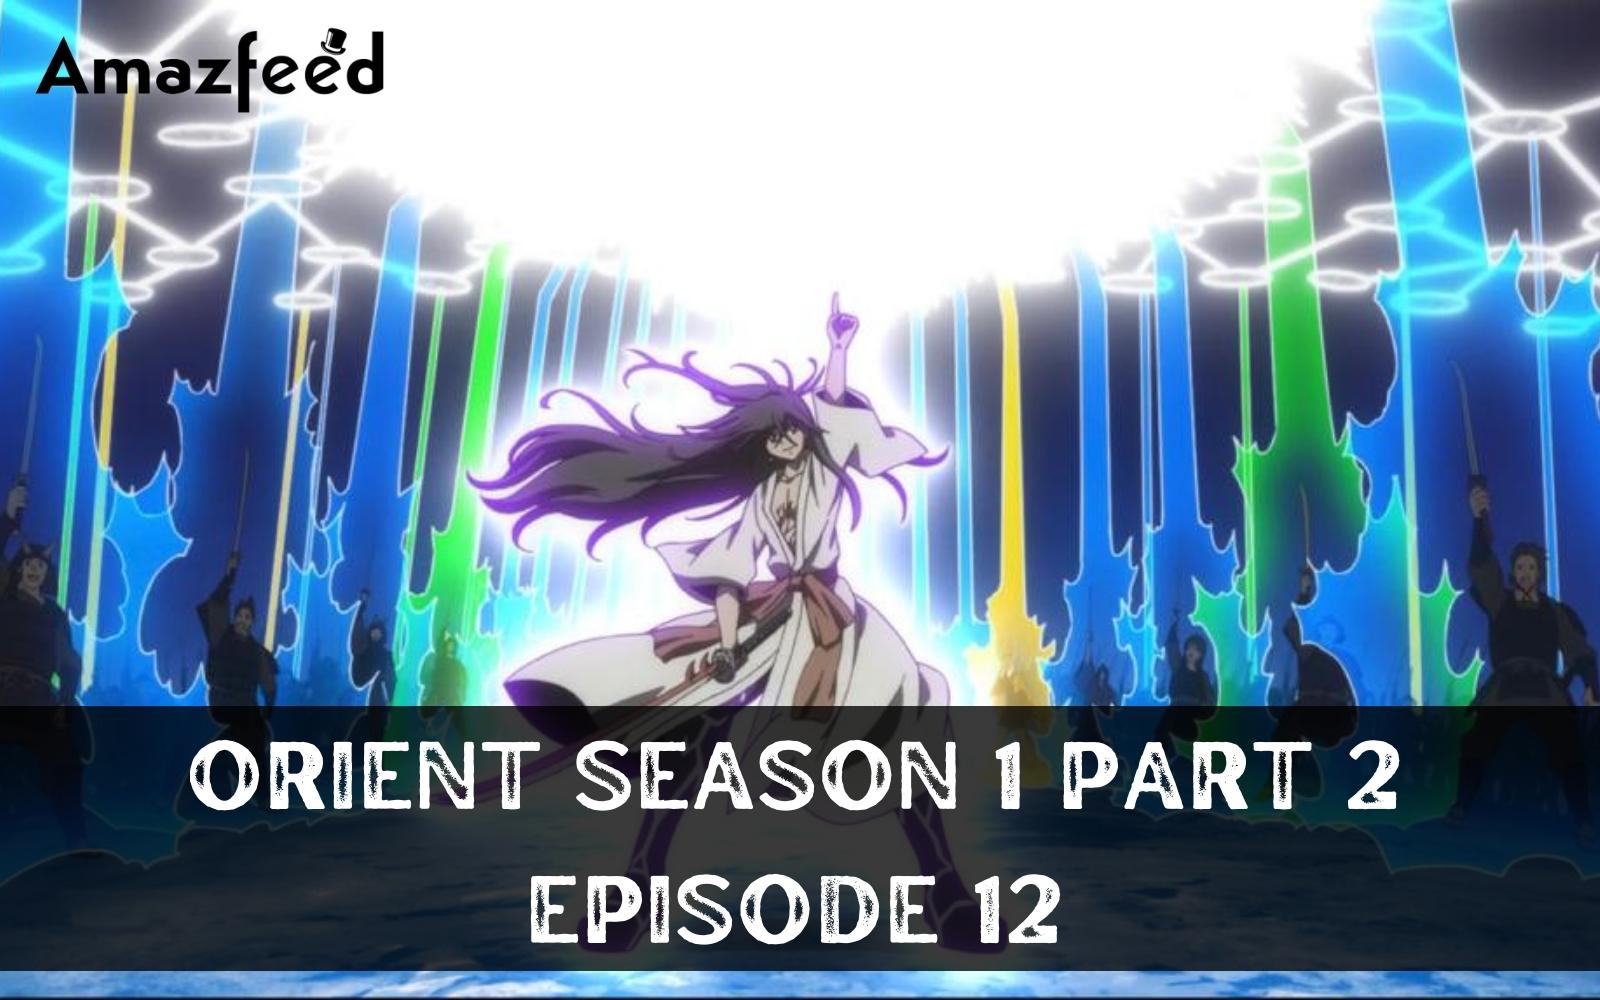 Orient Season 1 Part 2 Episode 12 : Release Date, Release Time, Countdown, Spoiler, Teaser & Recap